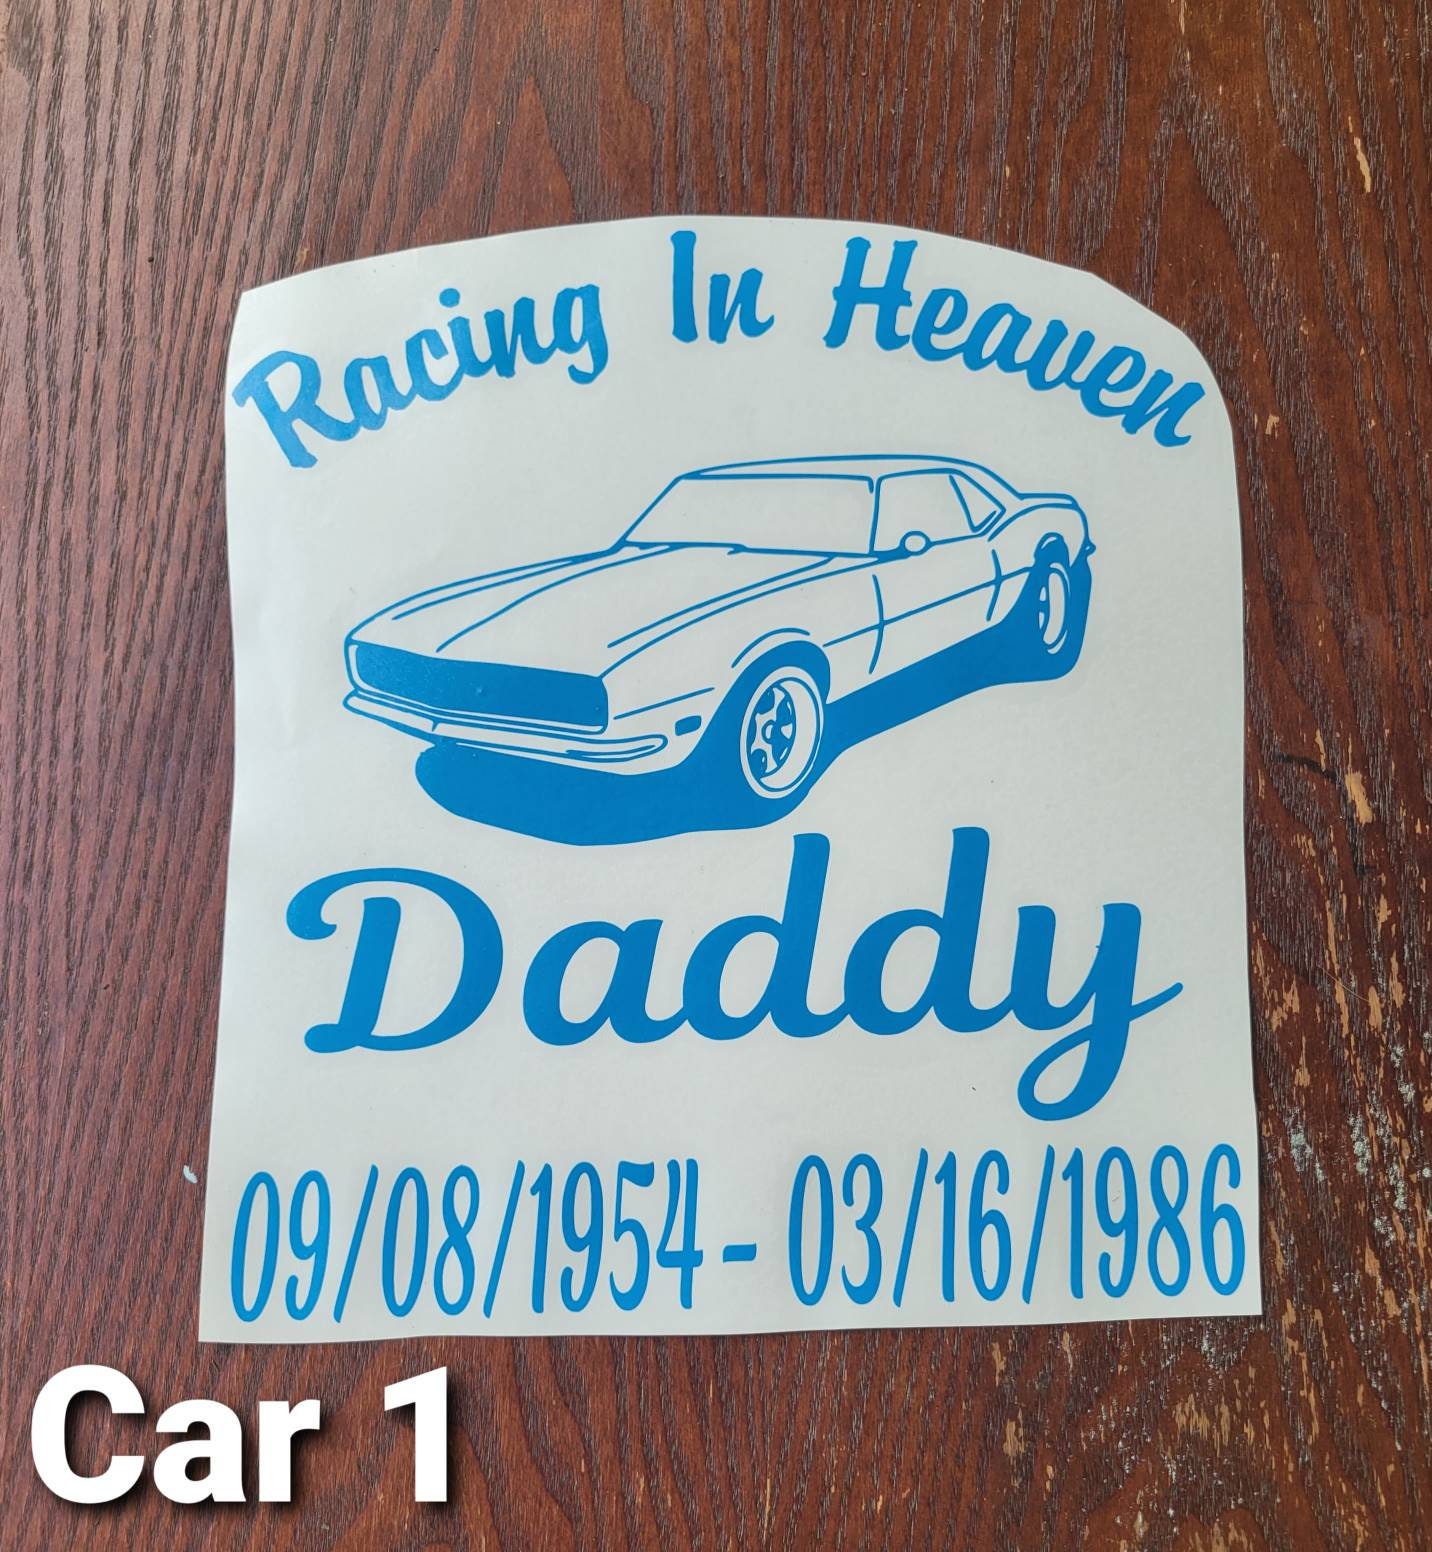 Racing in Heaven Decal Car Window Sticker, in Loving Memory, Lost